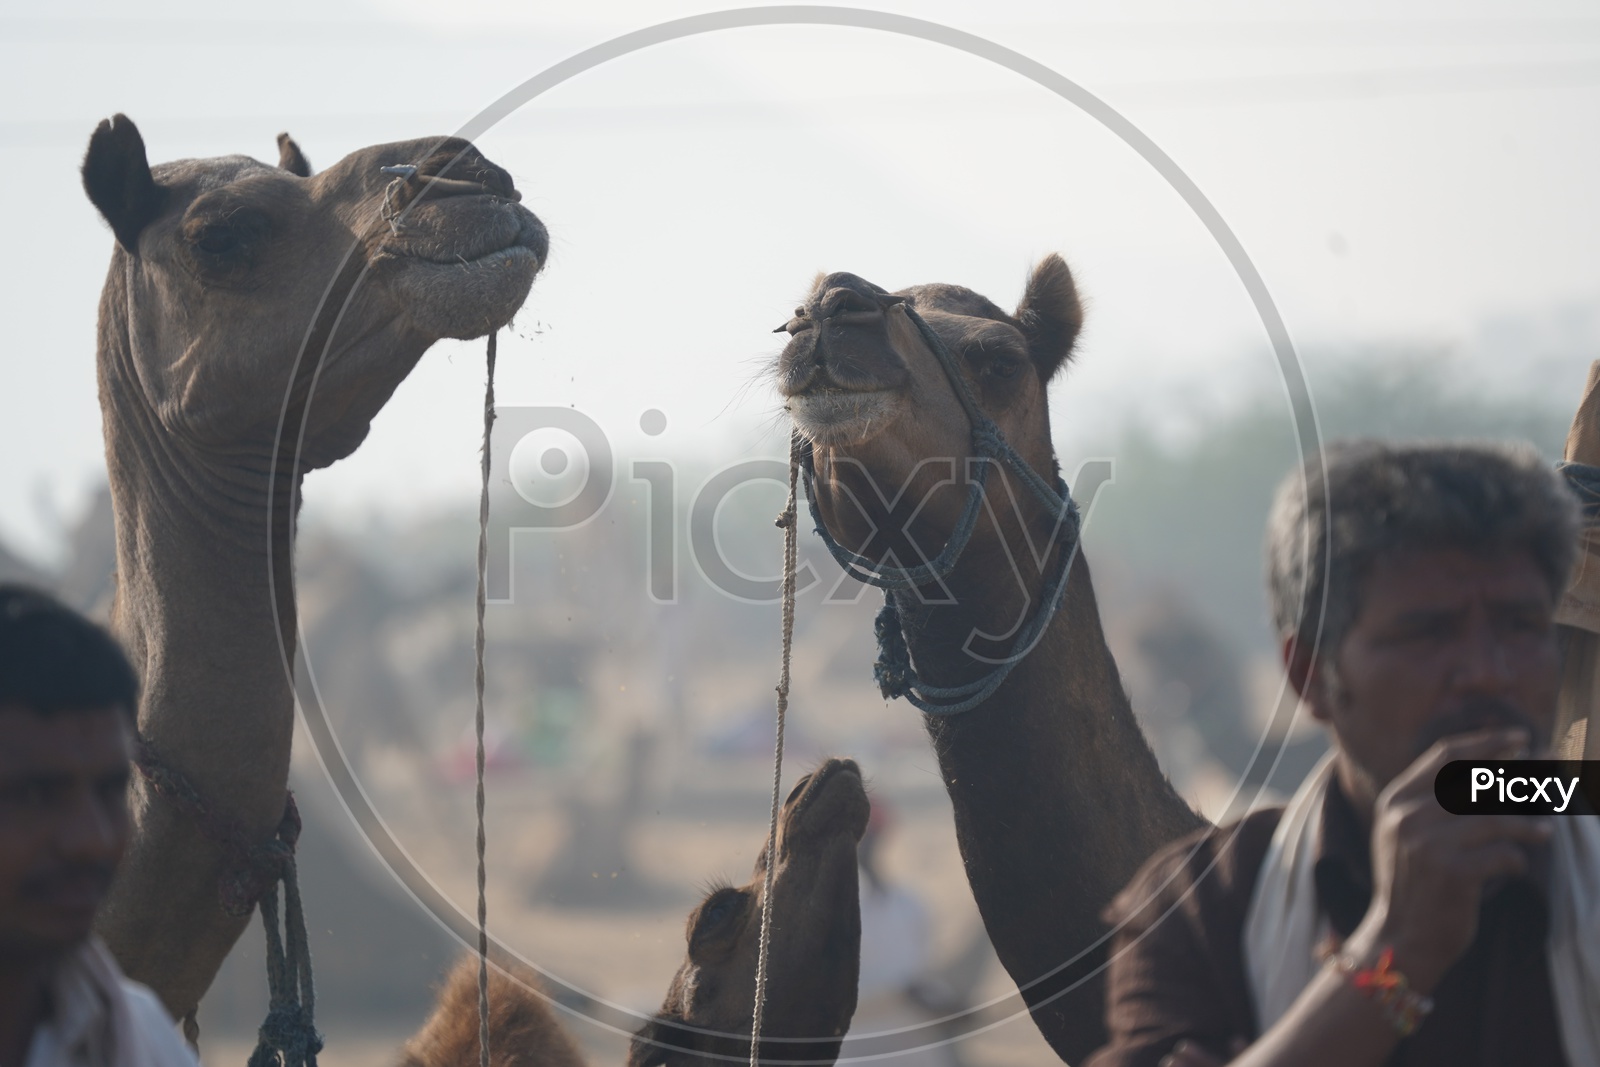 Camels in Pushkar Camel Fair